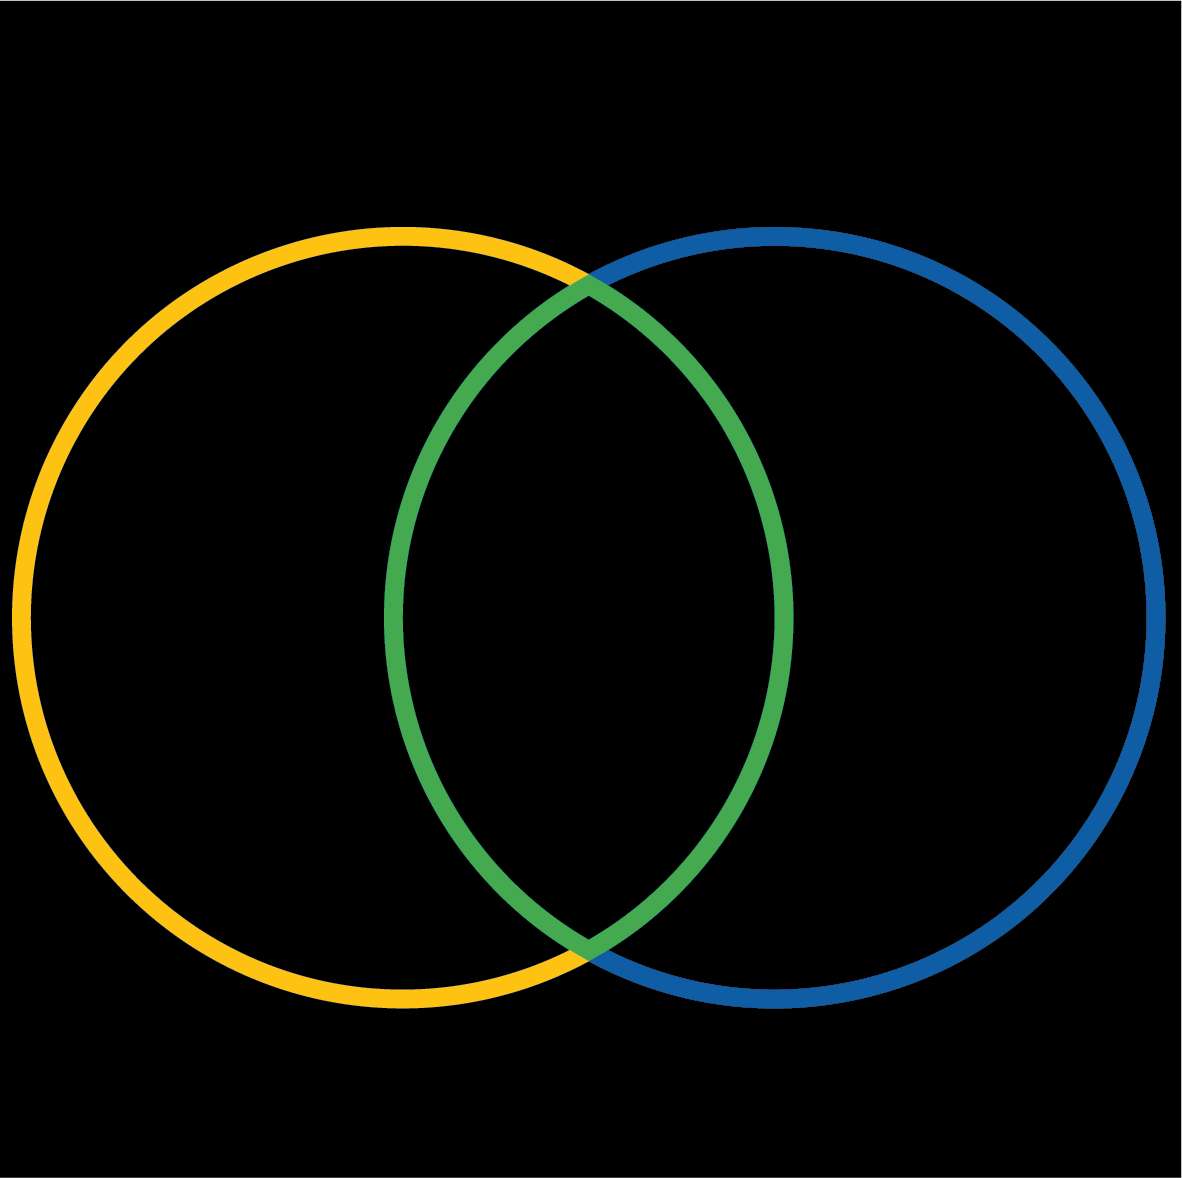 venn-diagram-2-circles-markings-by-thermmark